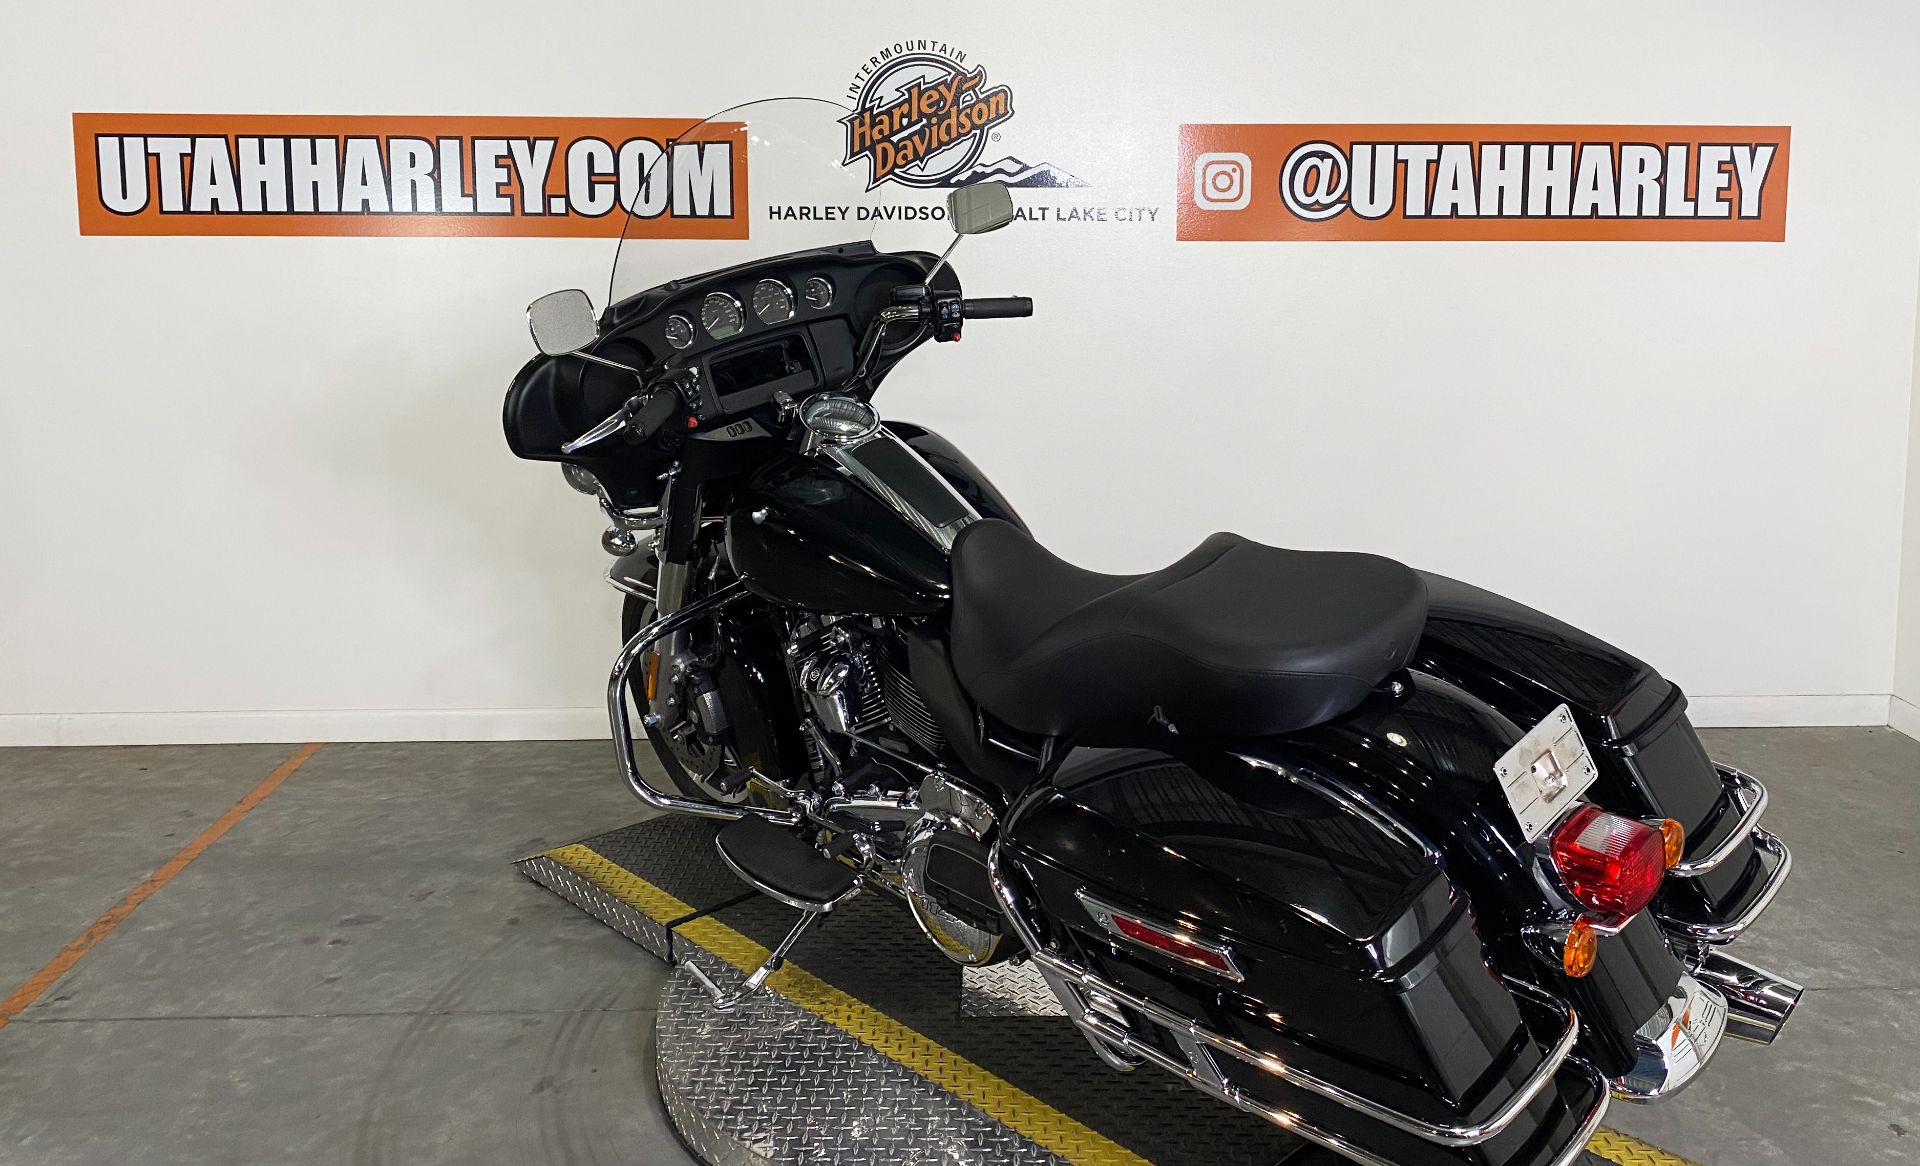 2020 Harley-Davidson Electra Glide Police - 114 motor in Salt Lake City, Utah - Photo 6